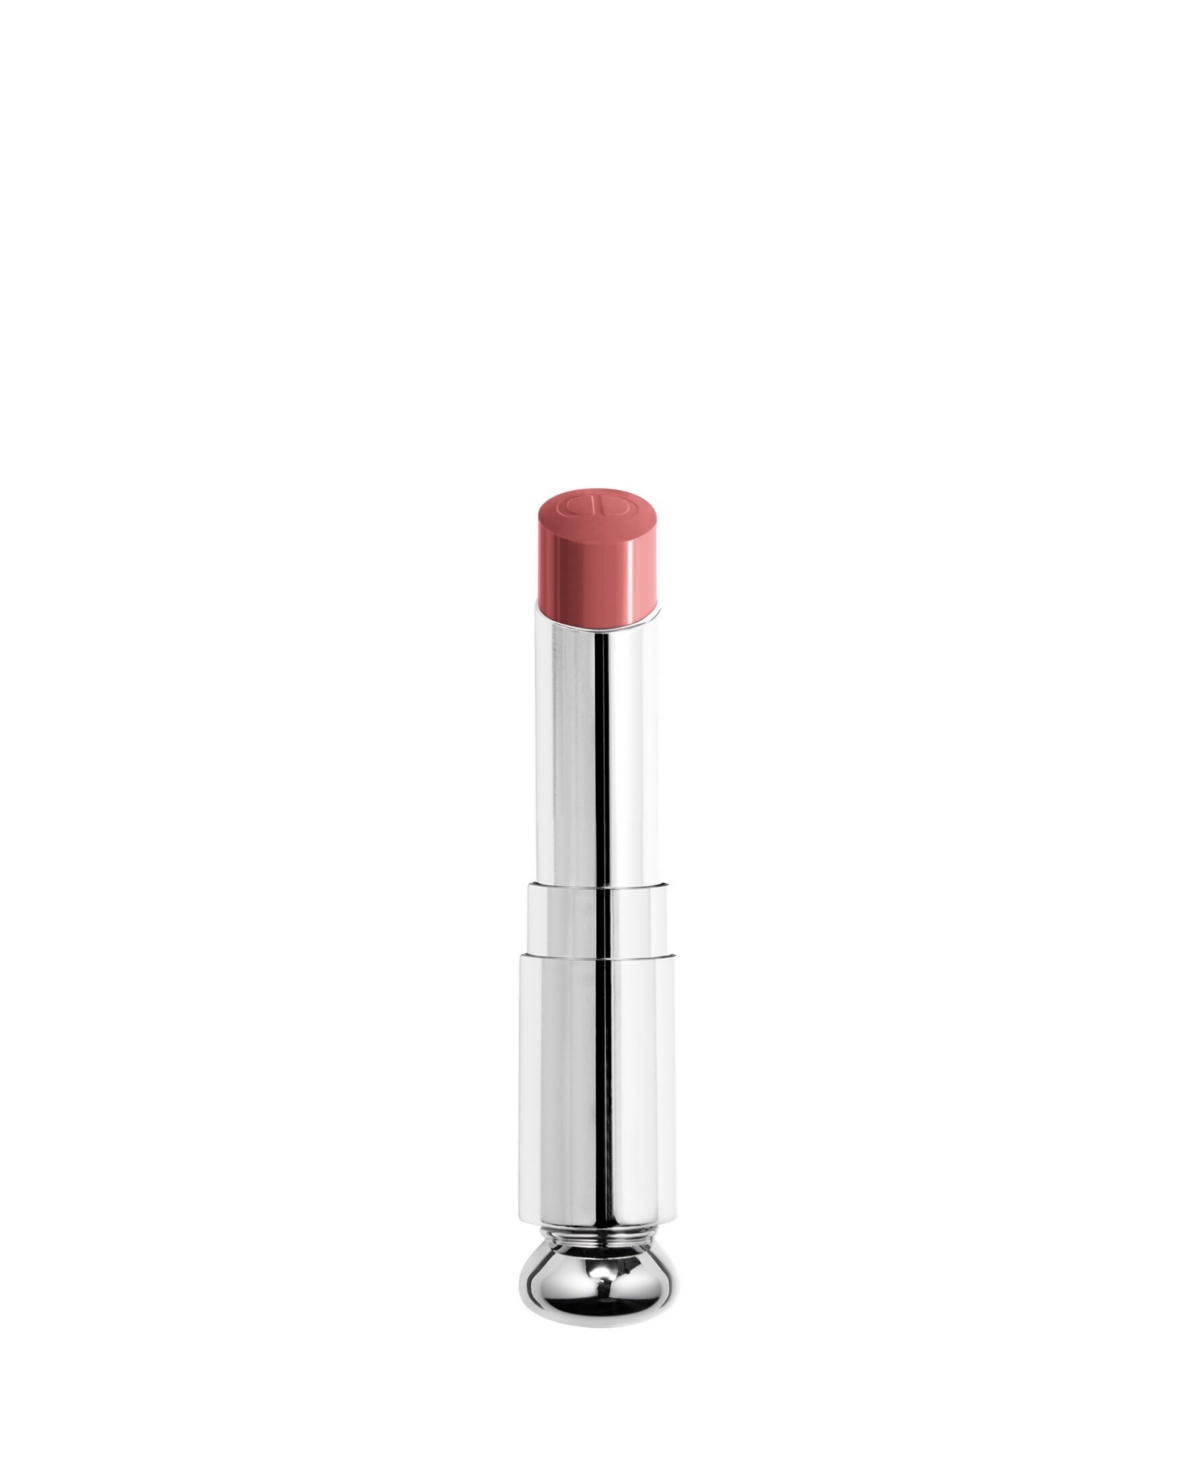 Dior Addict Shine Lipstick Refill In Rose Des Vents (nude Pink)